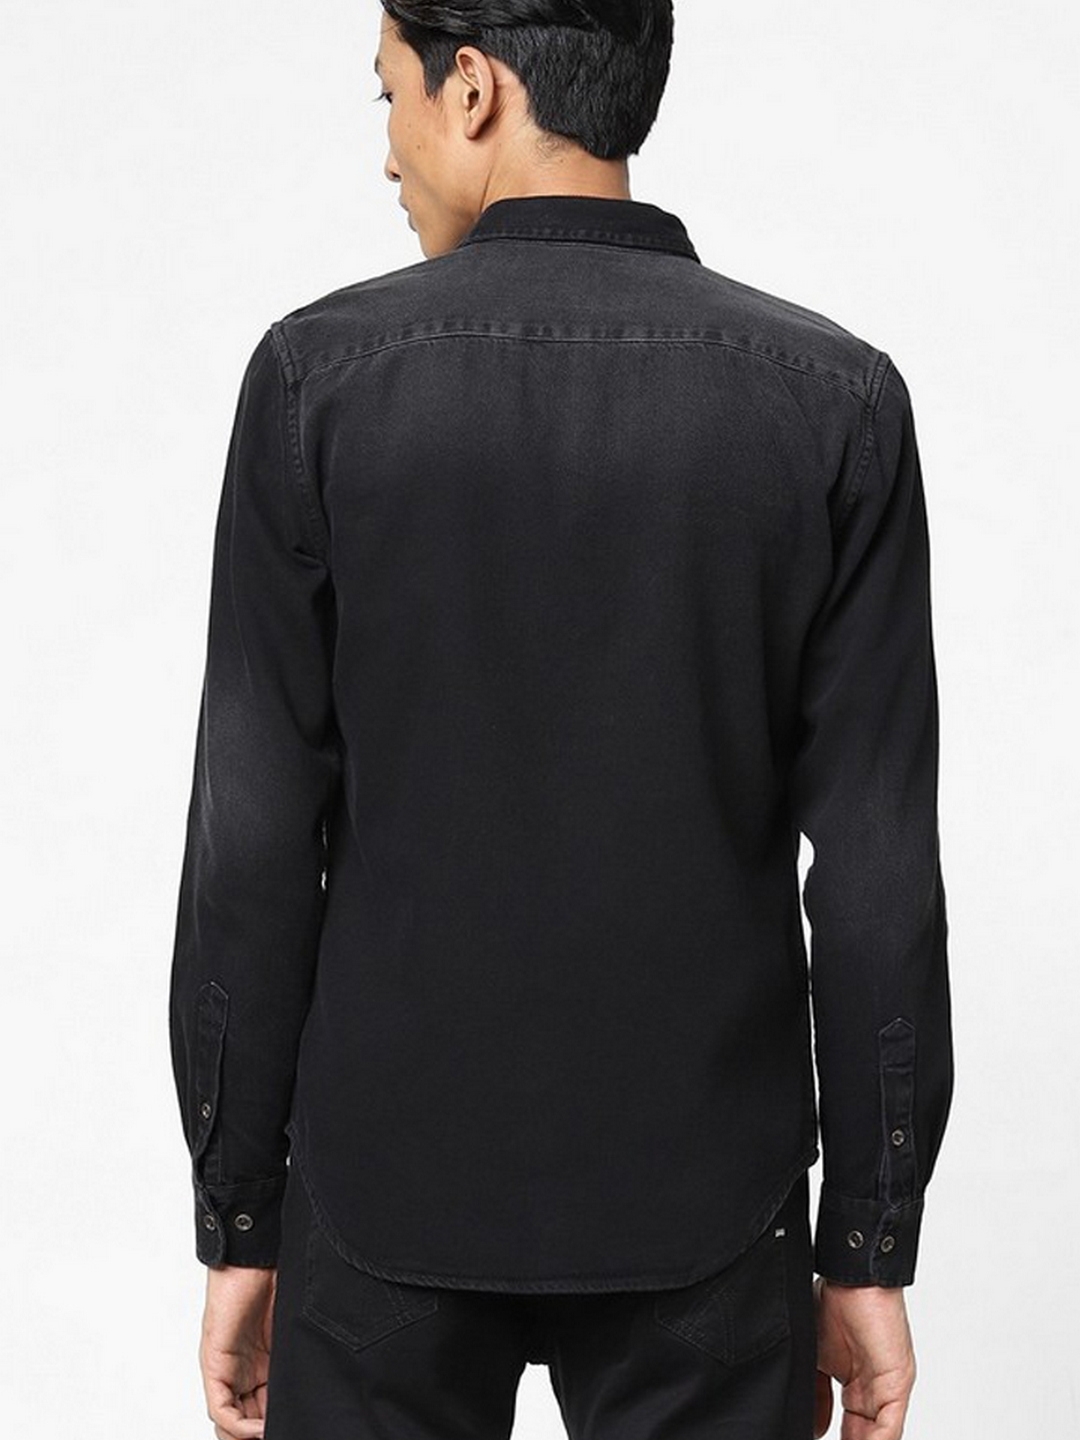 VERSACE Denim Shirt in Faded Washed Black | FWRD